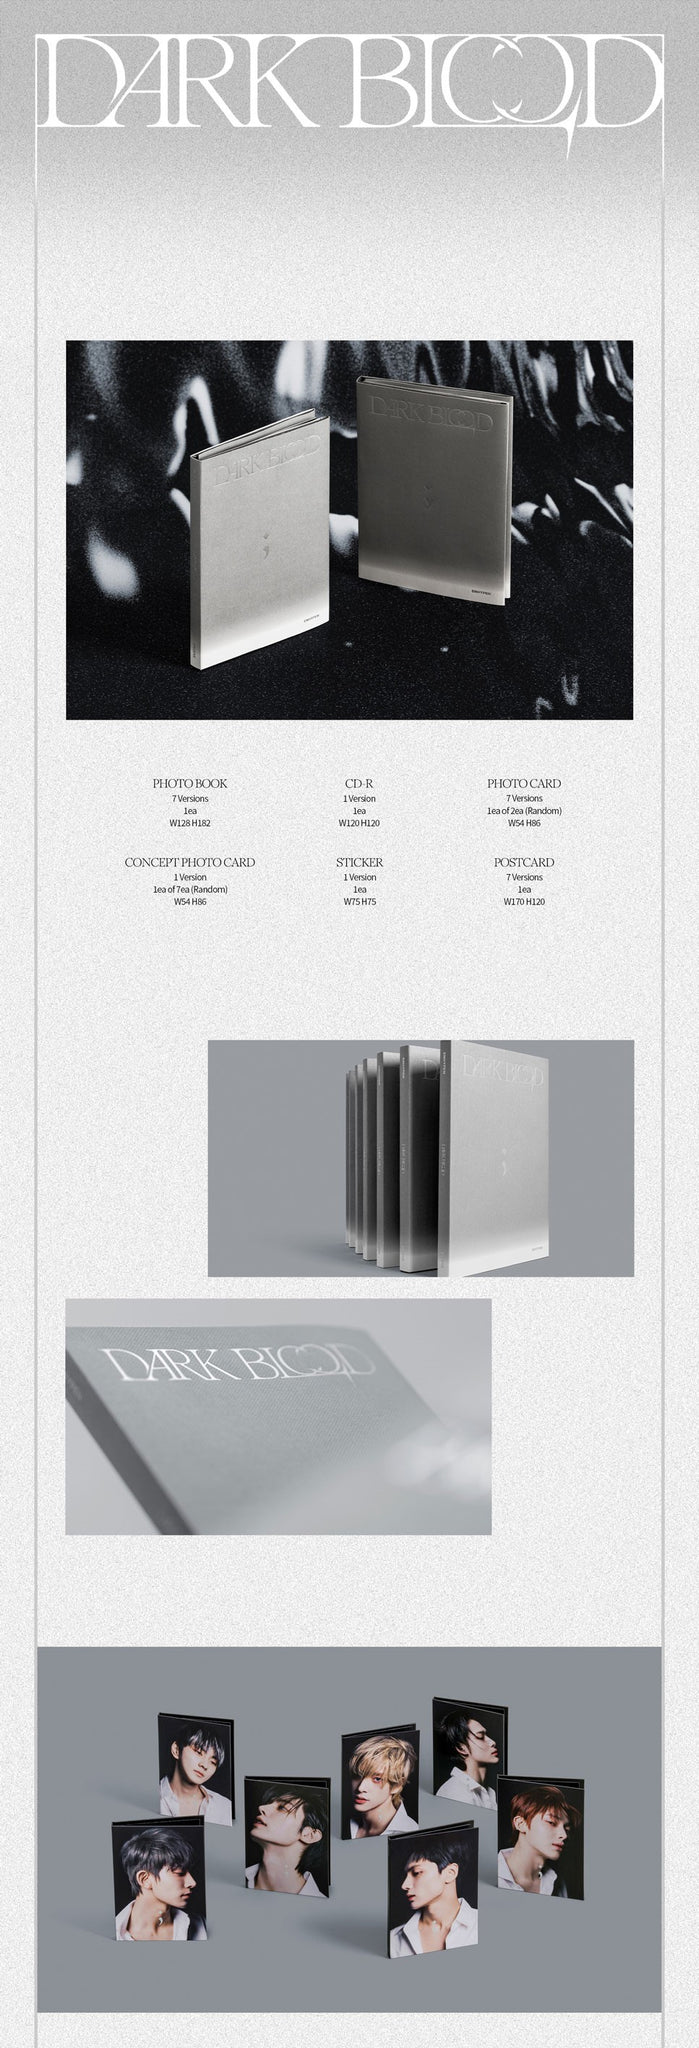 ENHYPEN DARK BLOOD - ENGENE Version Inclusions Album Info